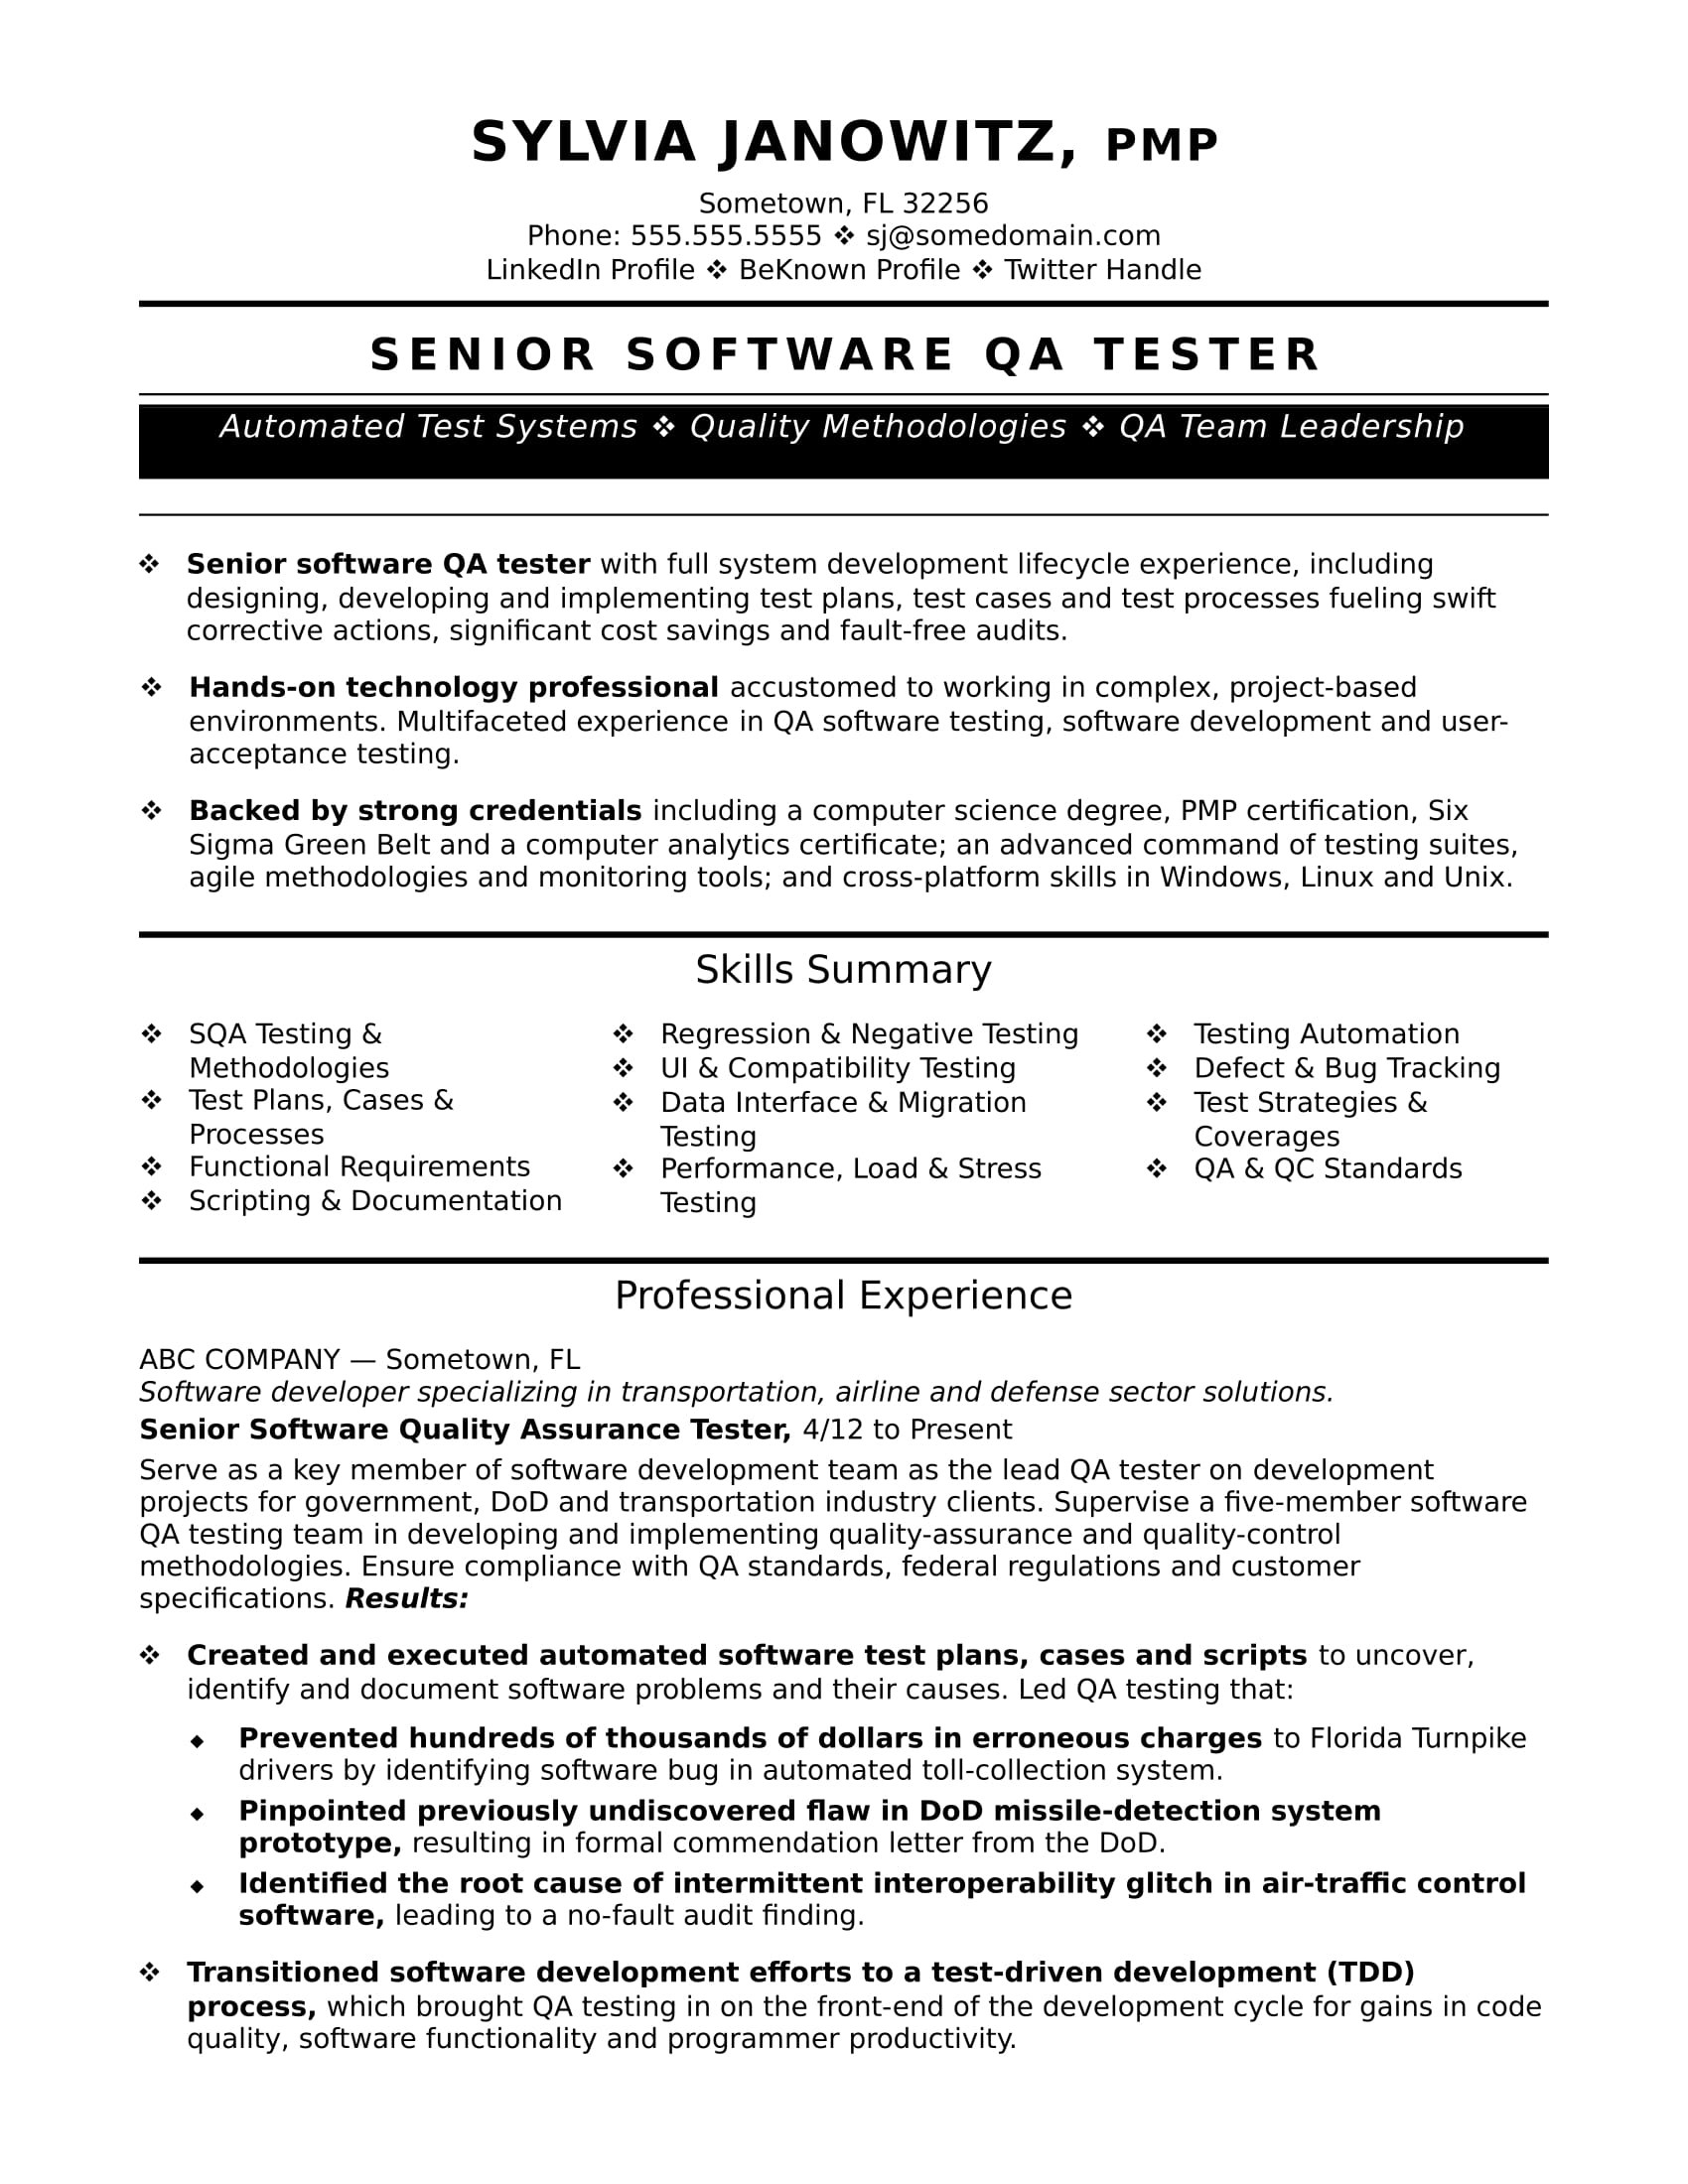 Sample Resume for software Tester 2 Years Experience Experienced Qa software Tester Resume Sample Monster.com